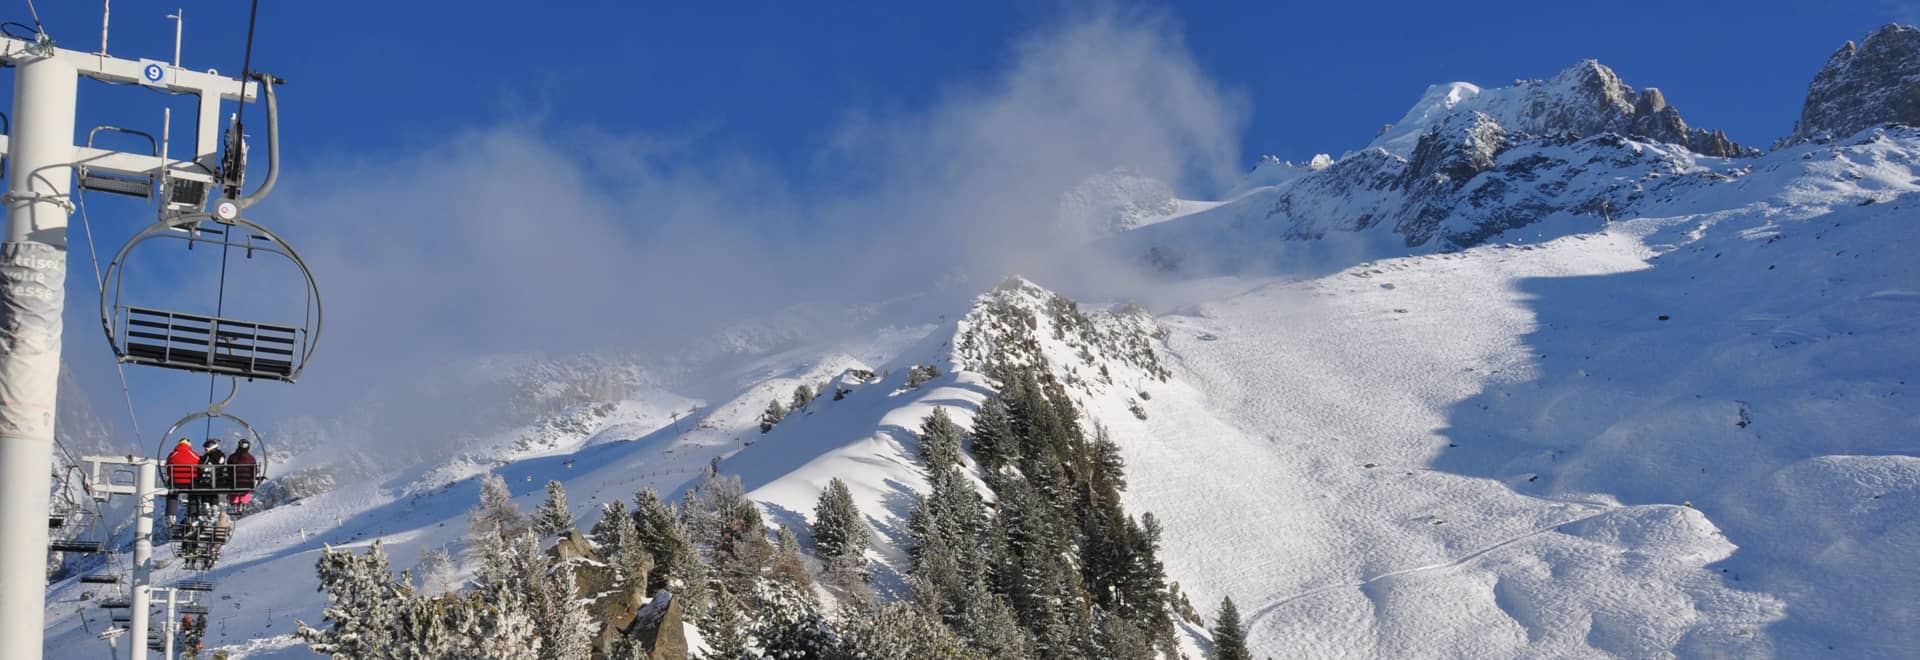 Location Ski Intersport Argentière Chamonix